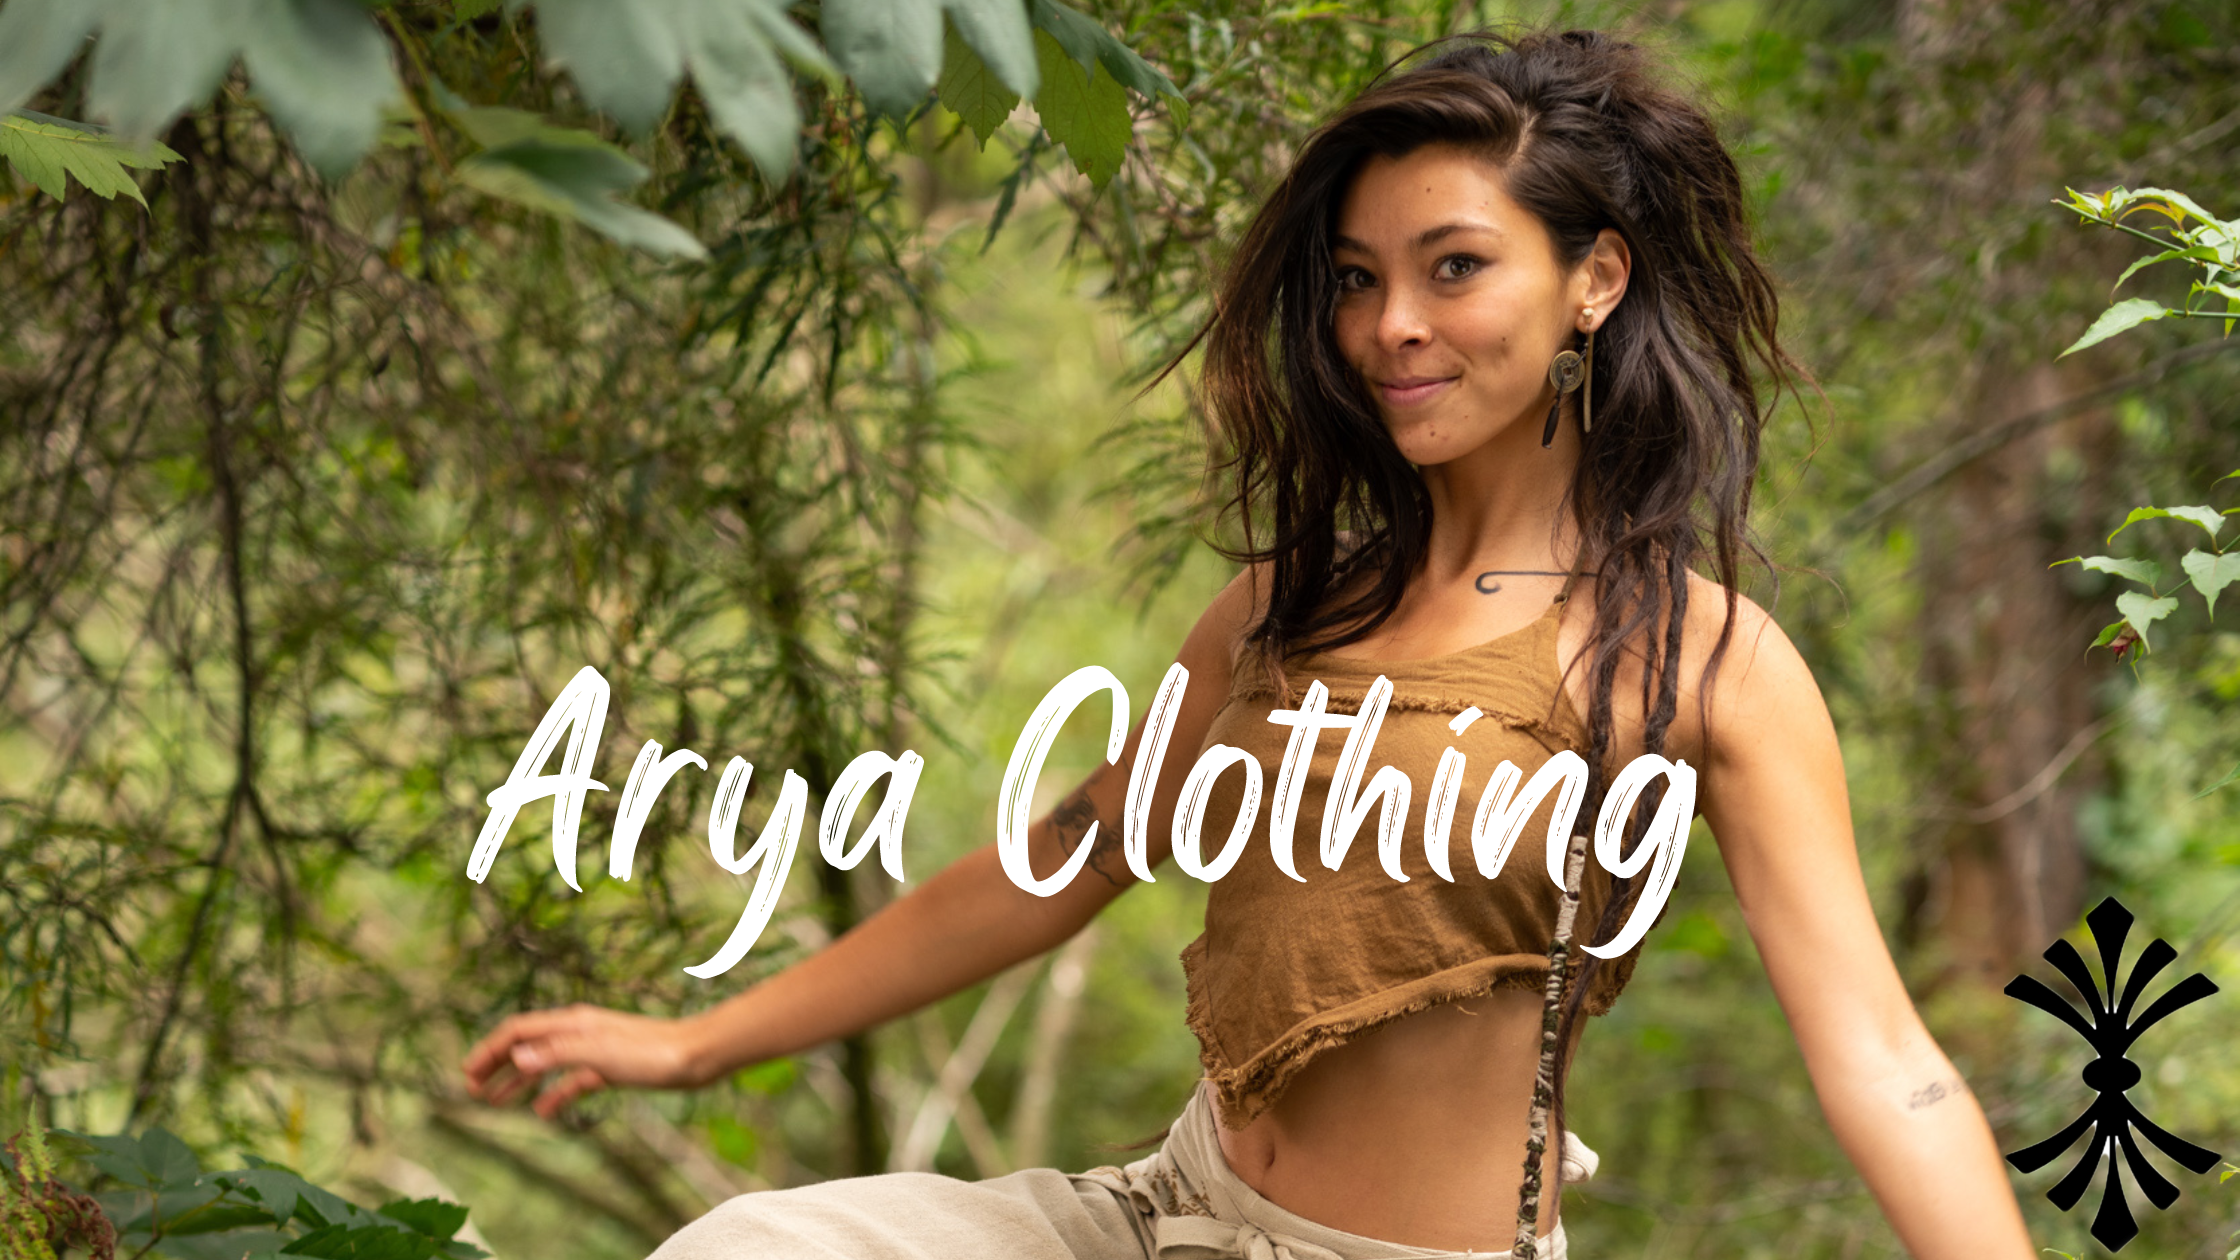 ARYA CLOTHING DESIGNS